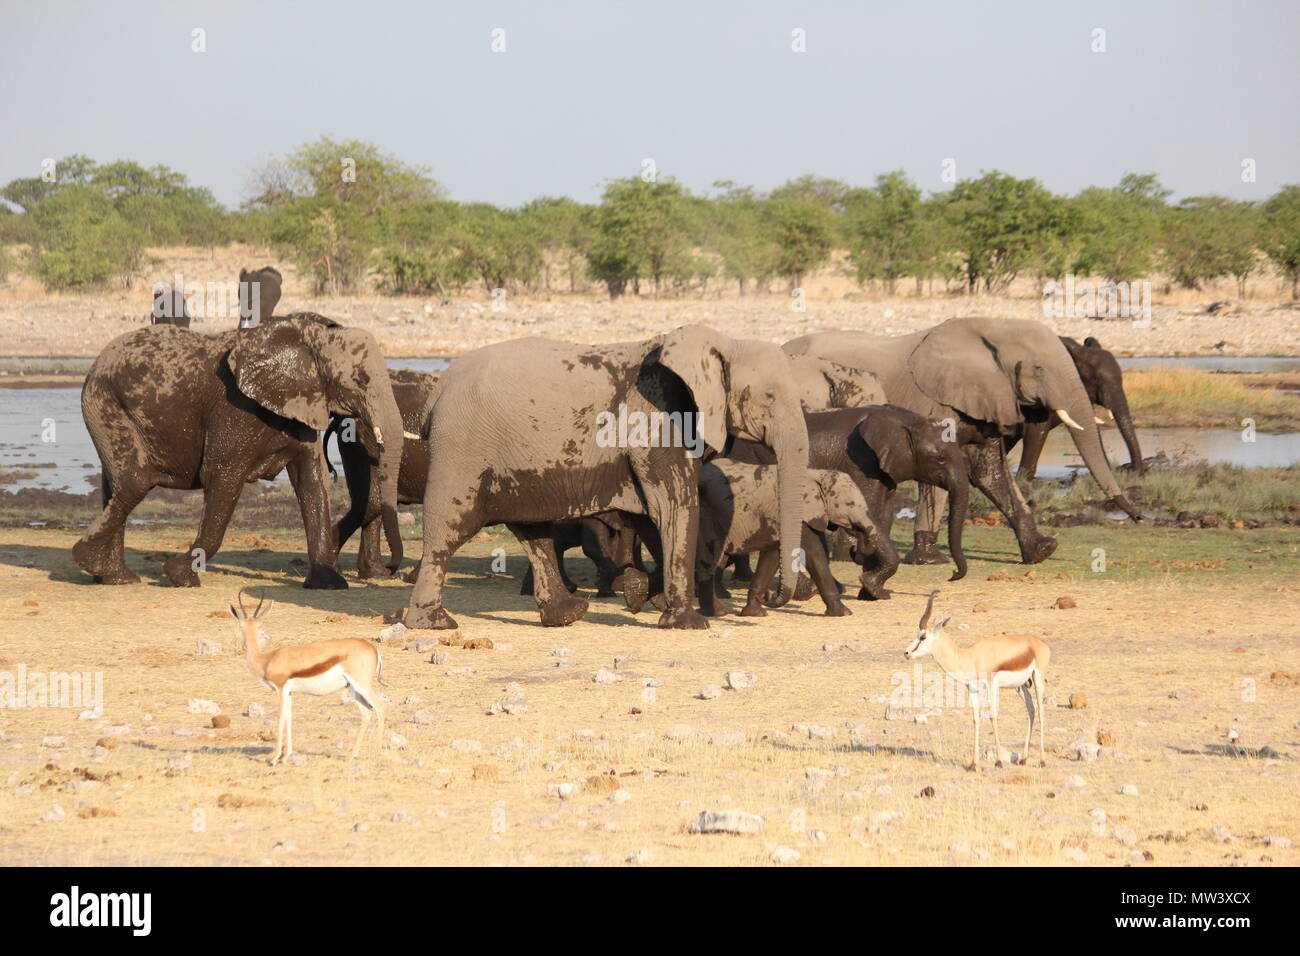 Pack of Elephants walking Stock Photo